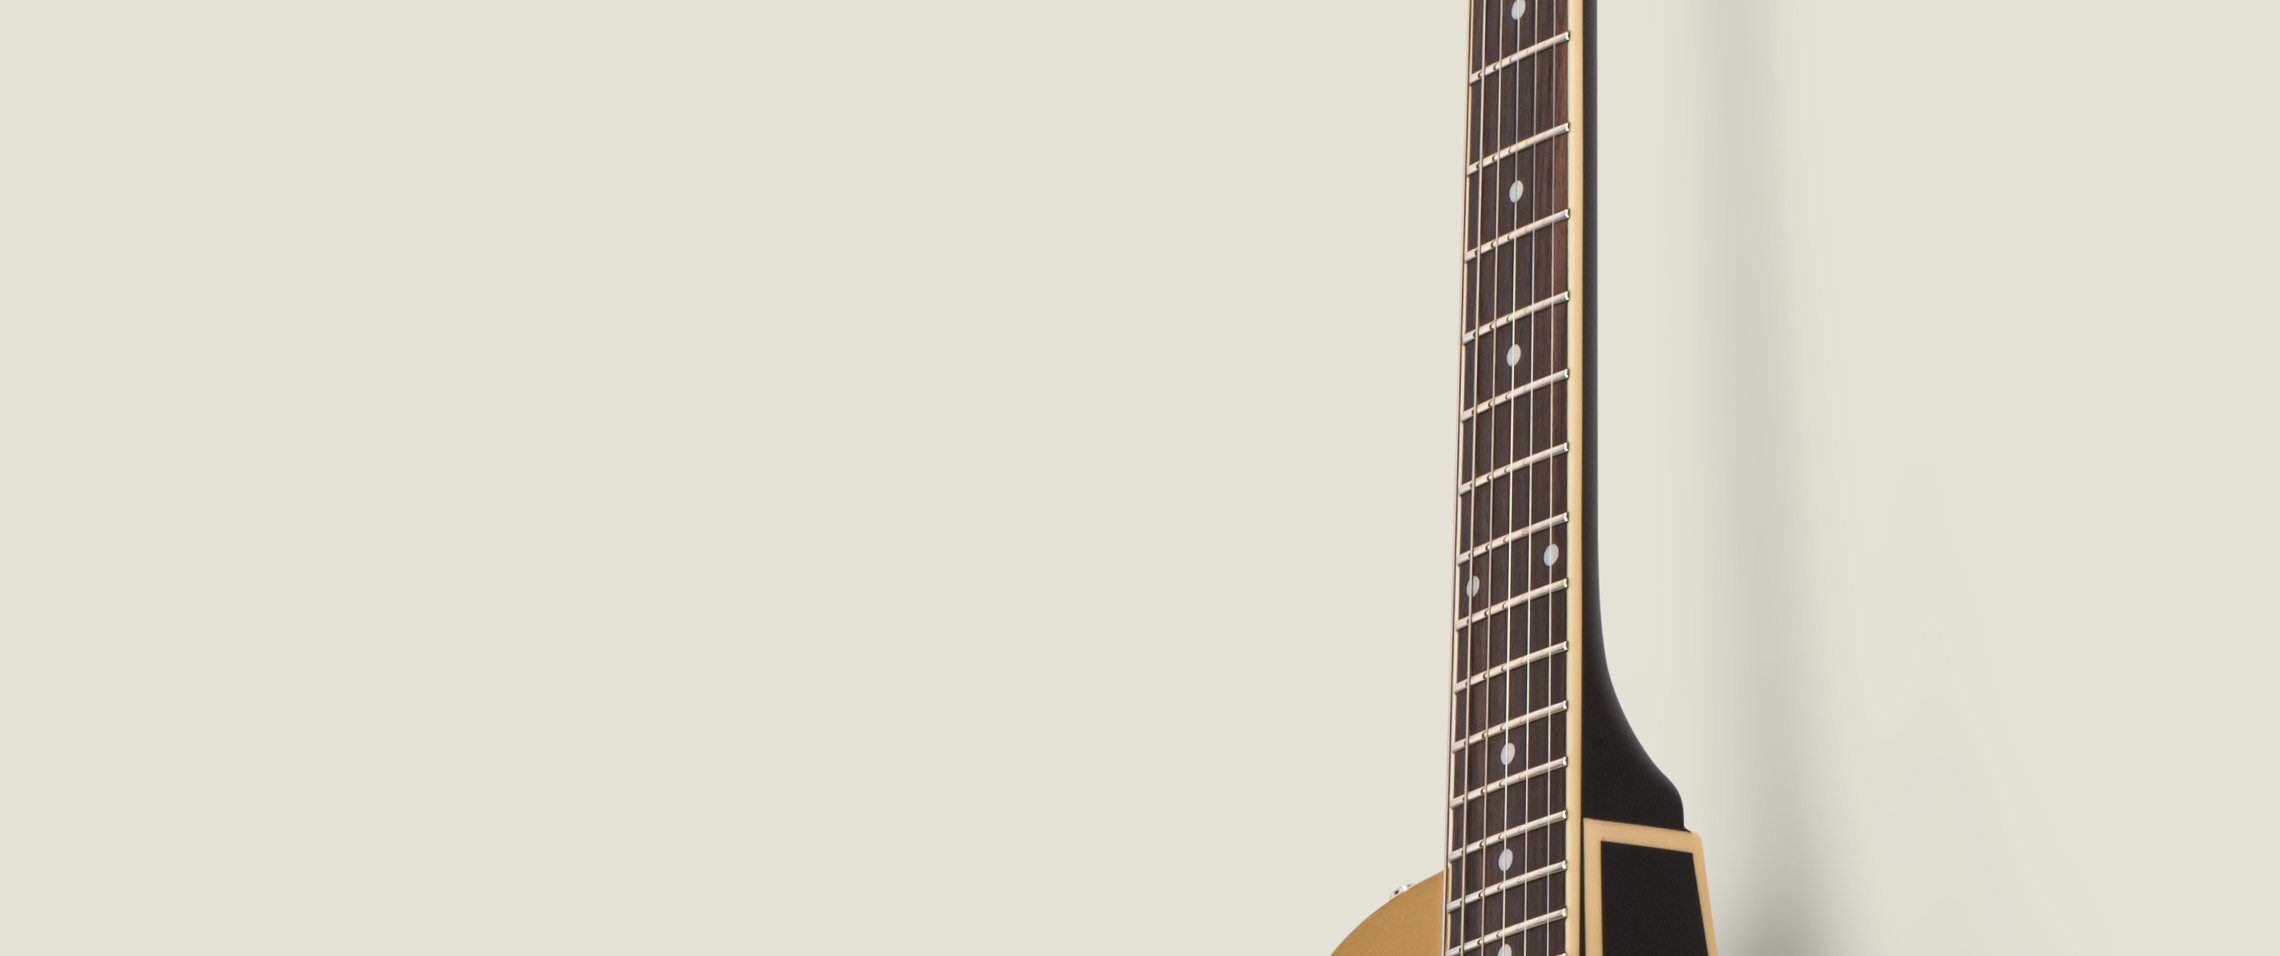 E-Gitarre Solidbody klassisches St-Design Neu Zubehör G 52 orange Vibrato 